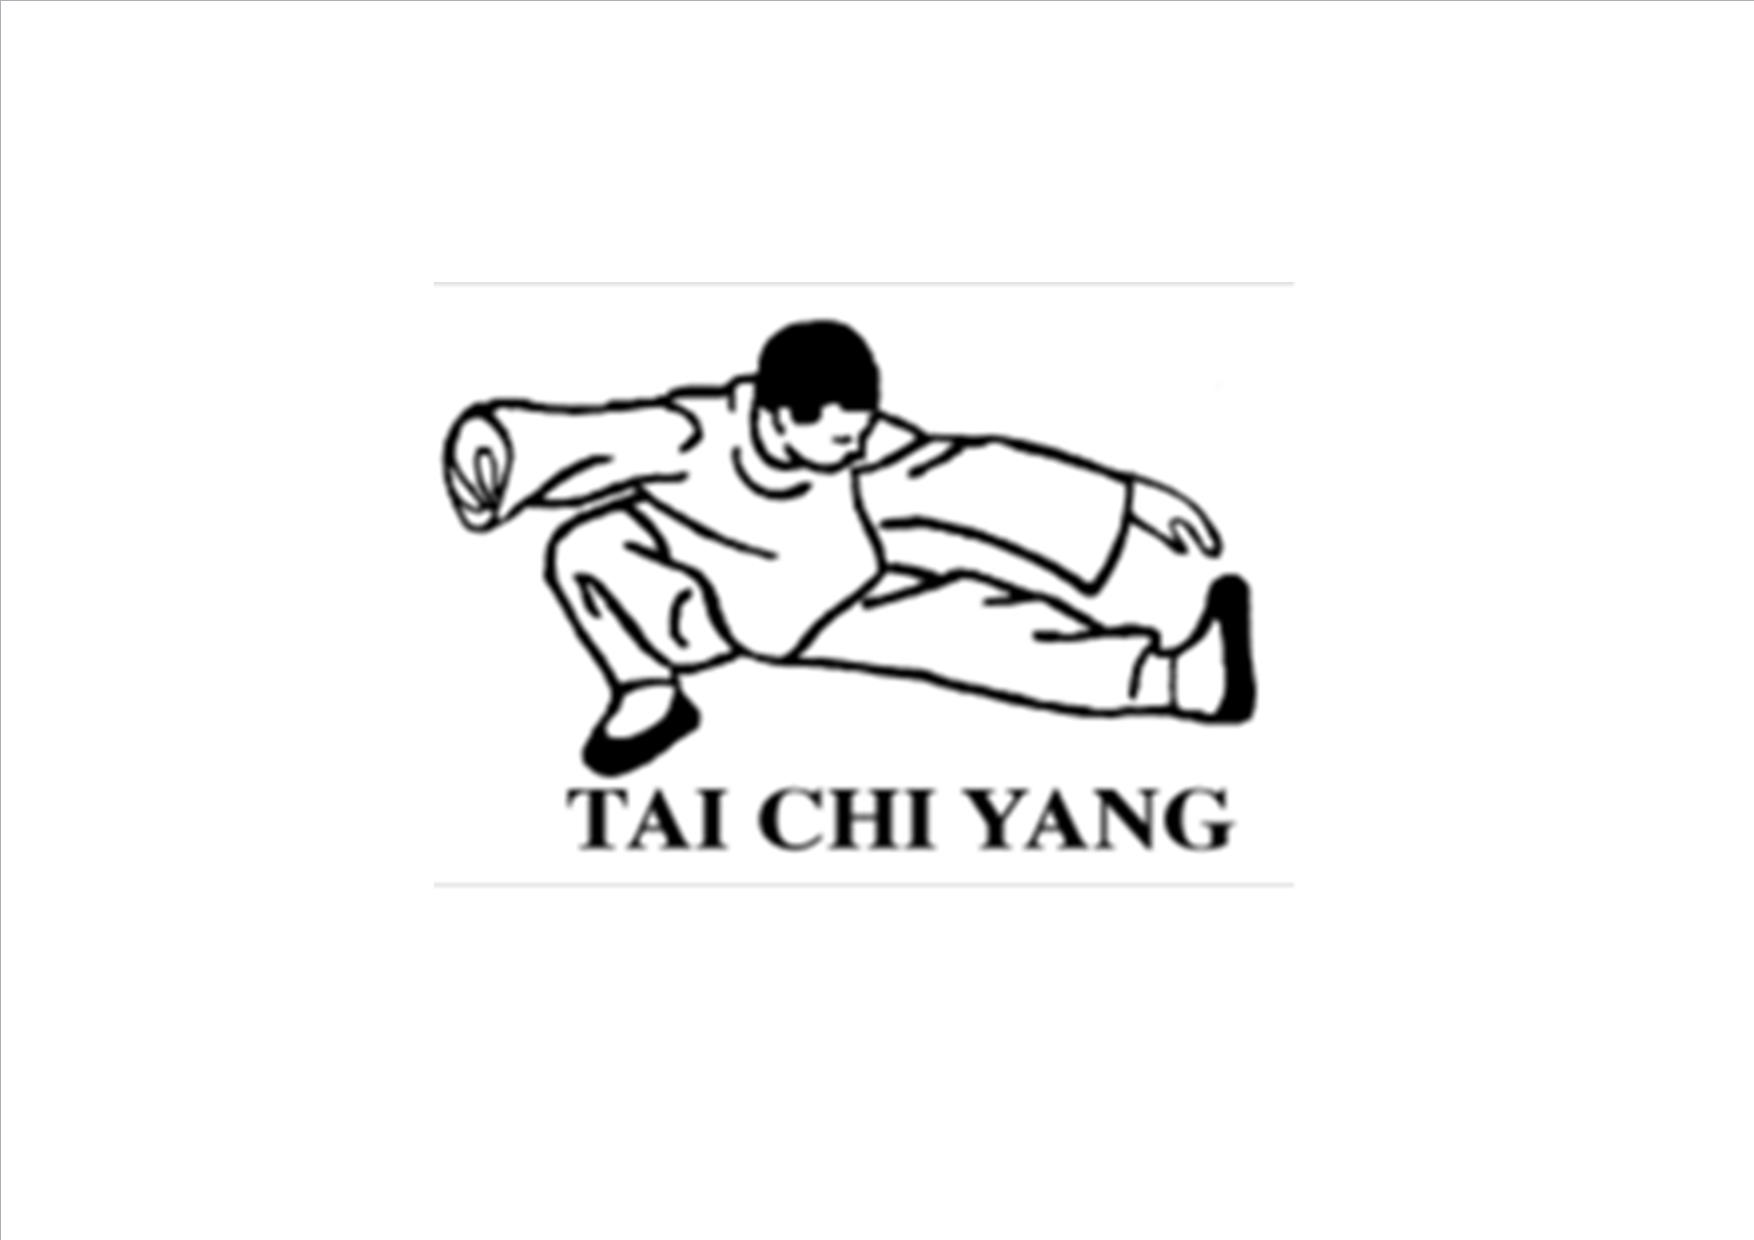 Contacter l'Association Tai Chi Yang